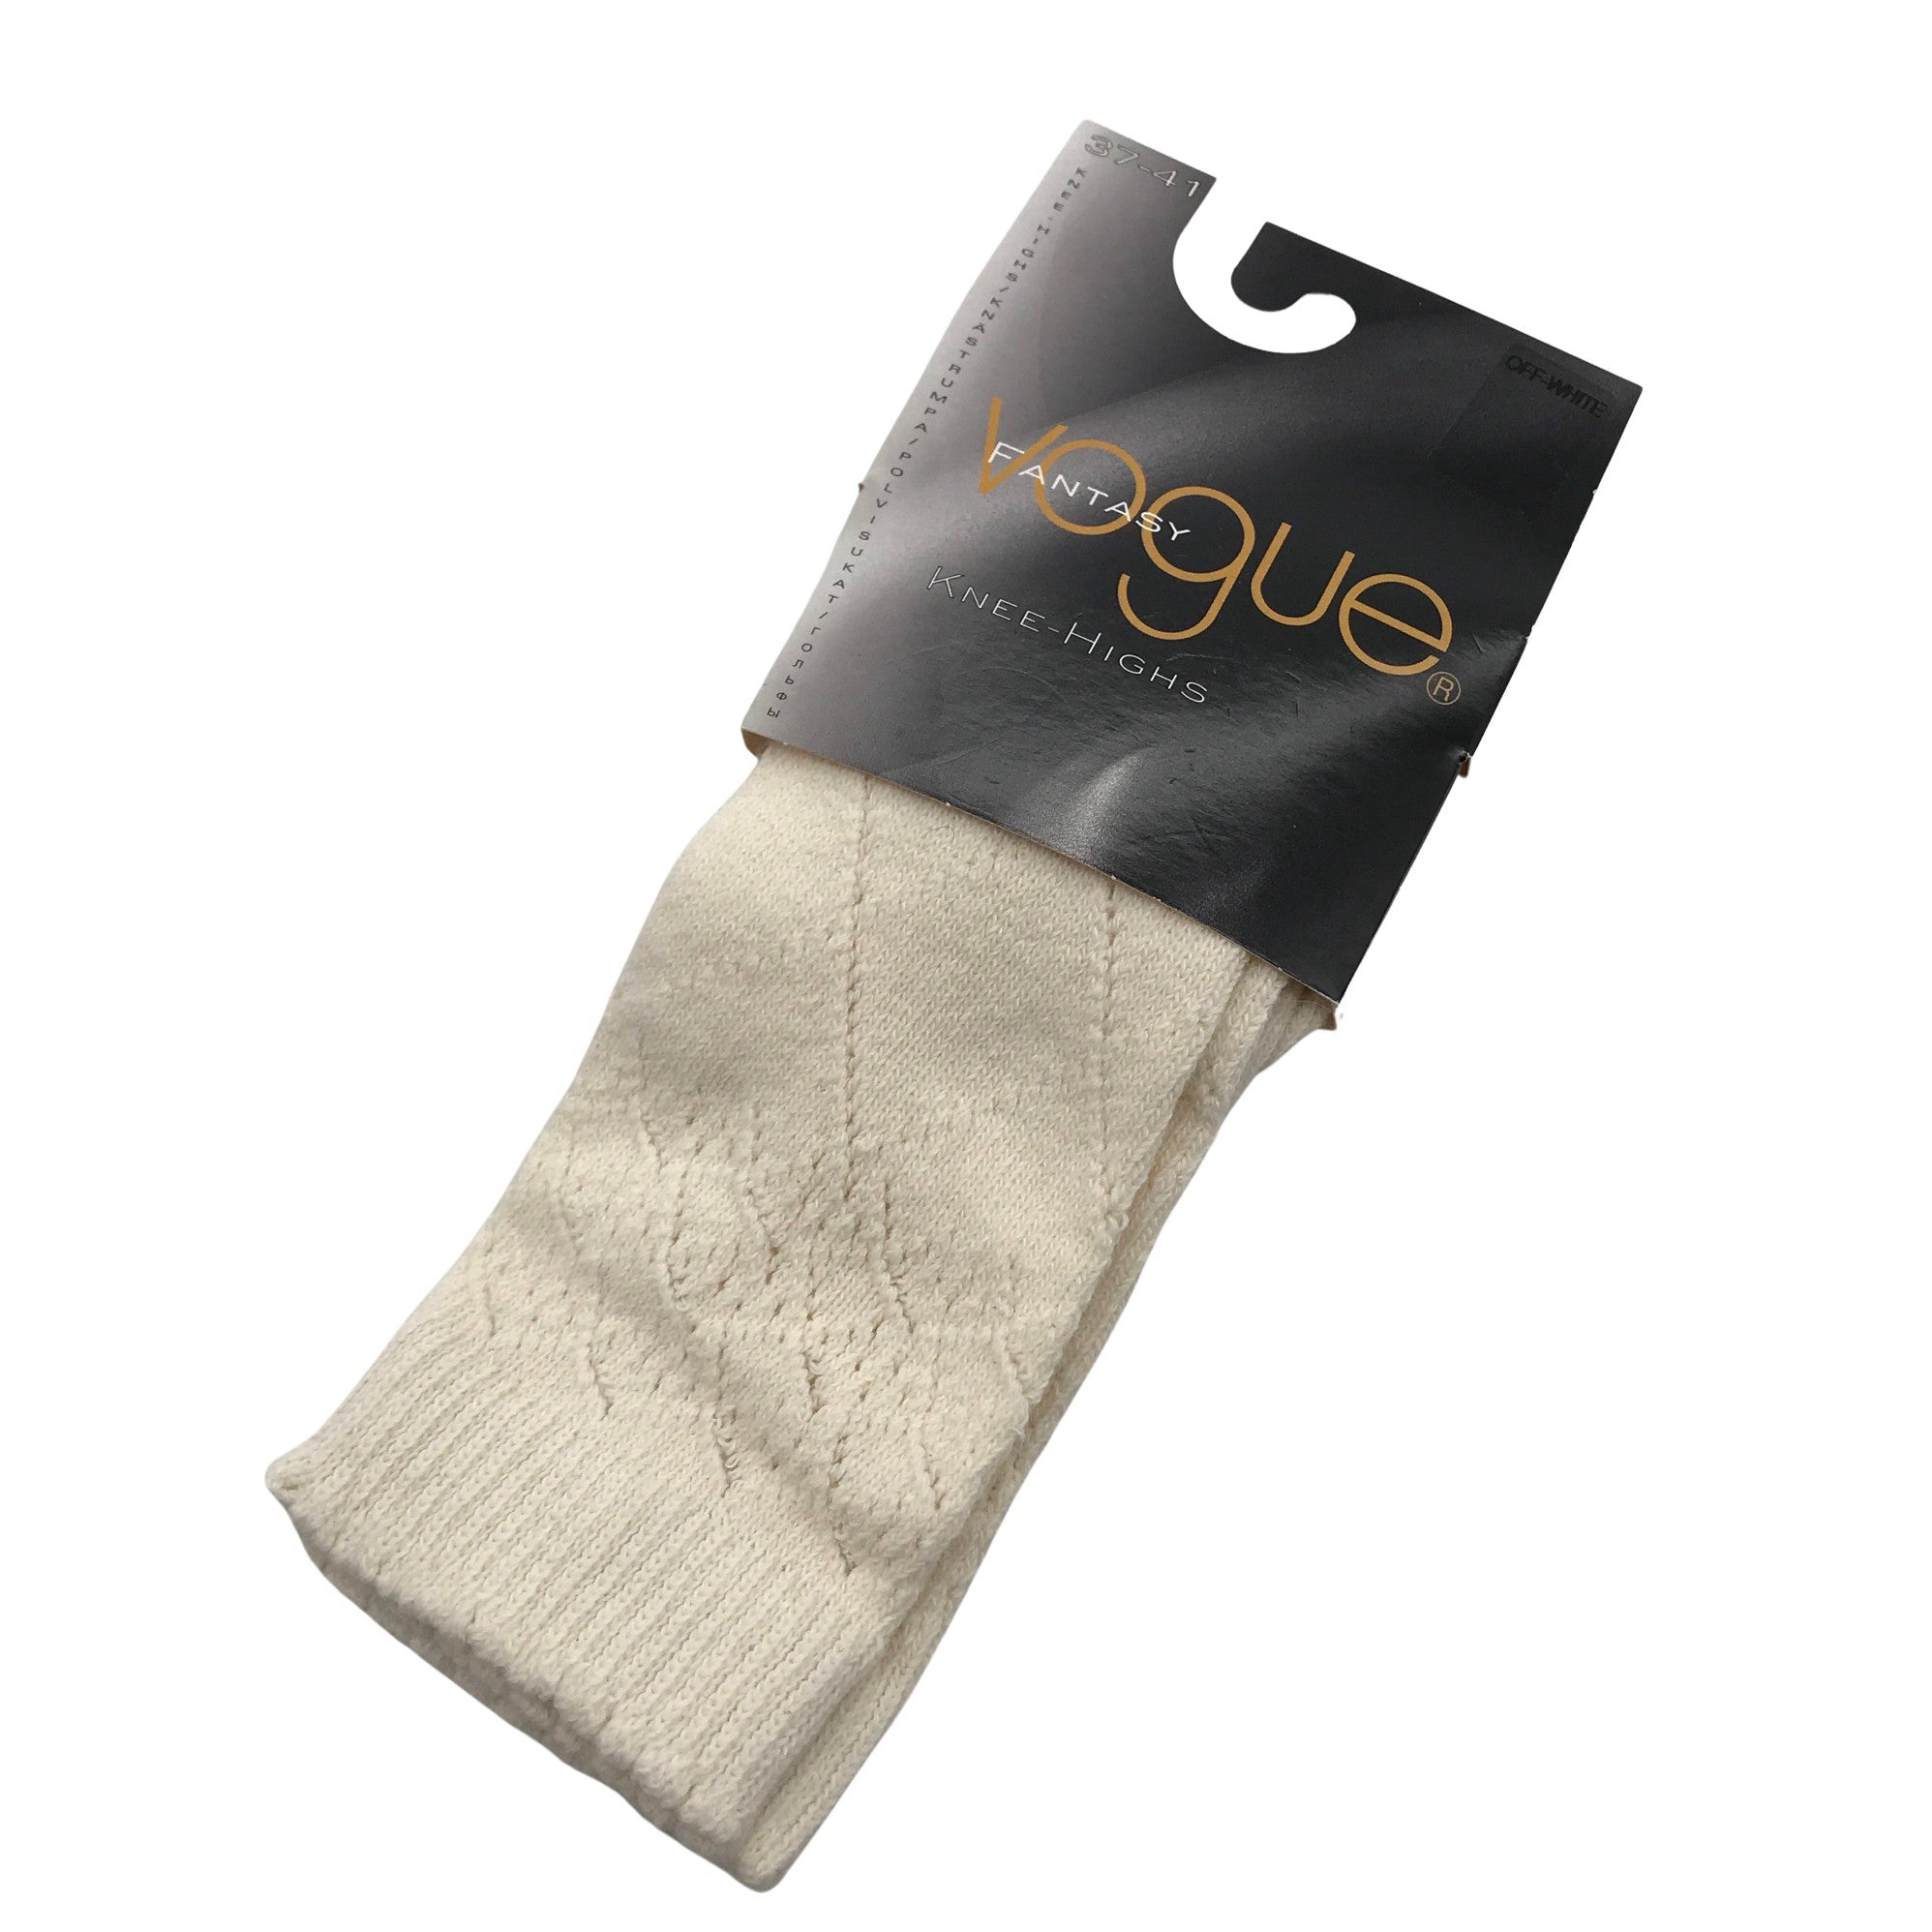 Women's Vogue Socks, size 38 (White)